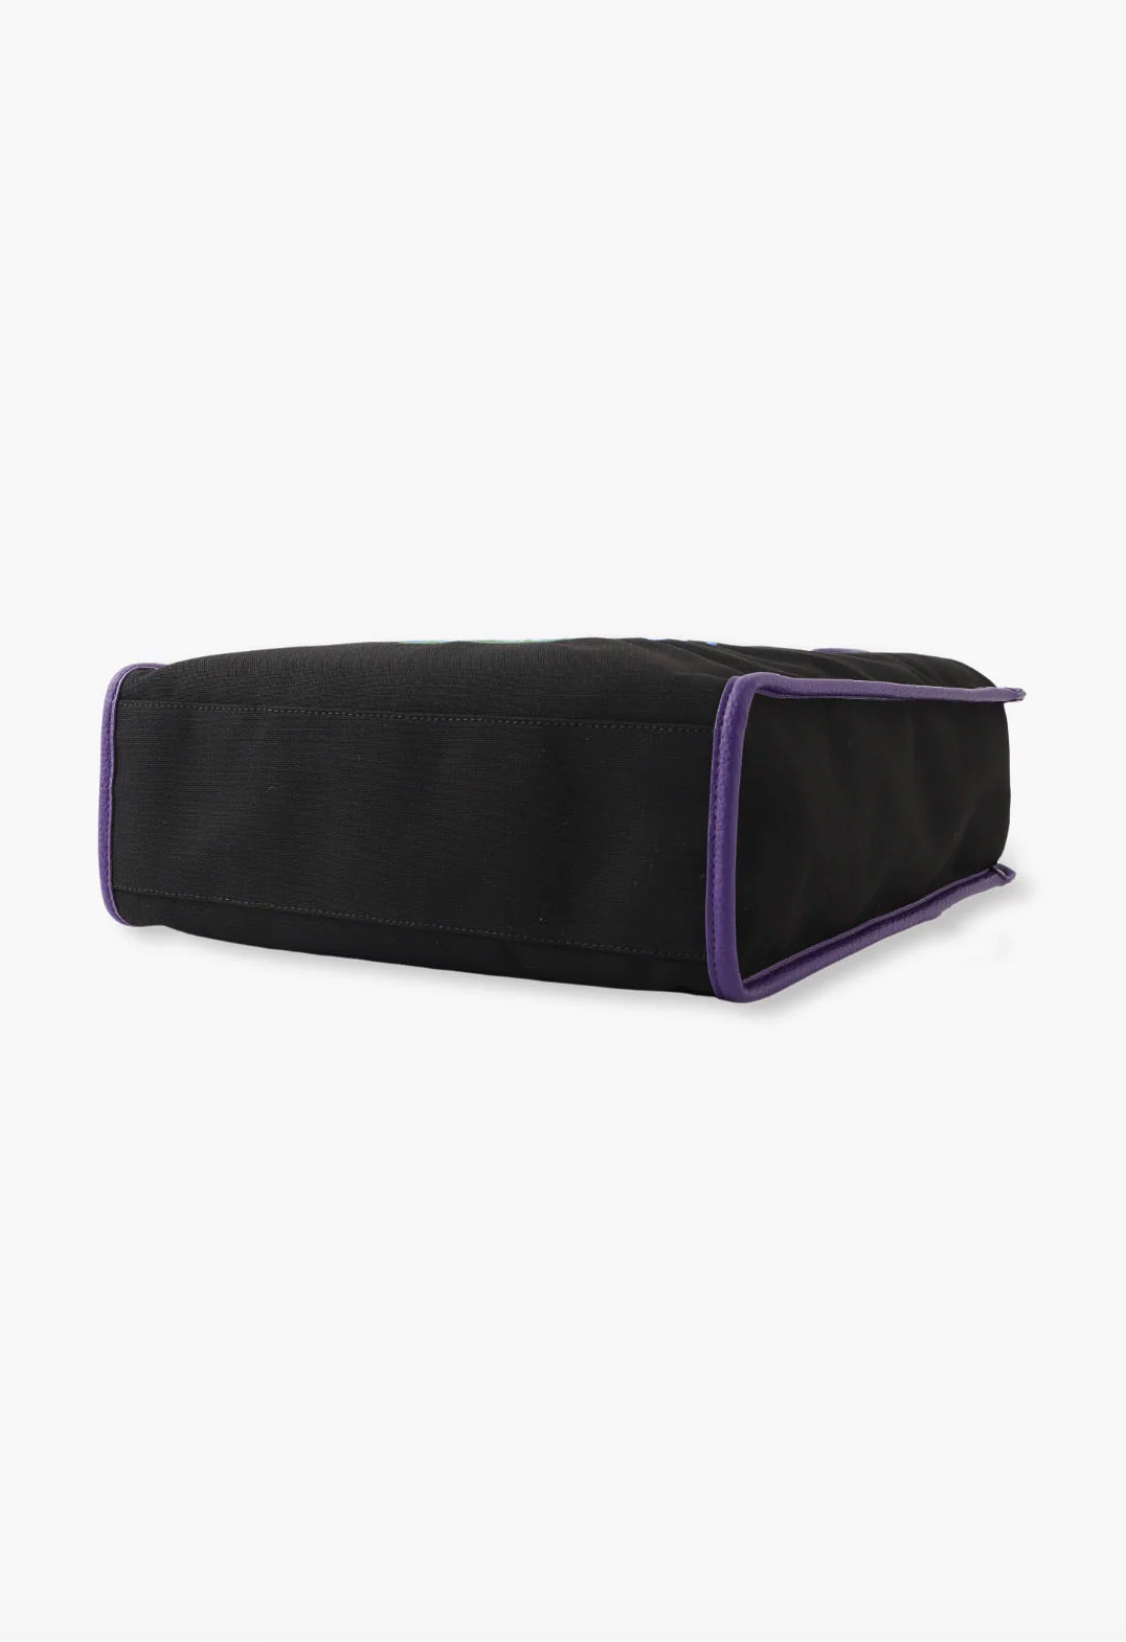 Peacock Tote Bag in back reinforced bottom is in plain black, hems are in purple